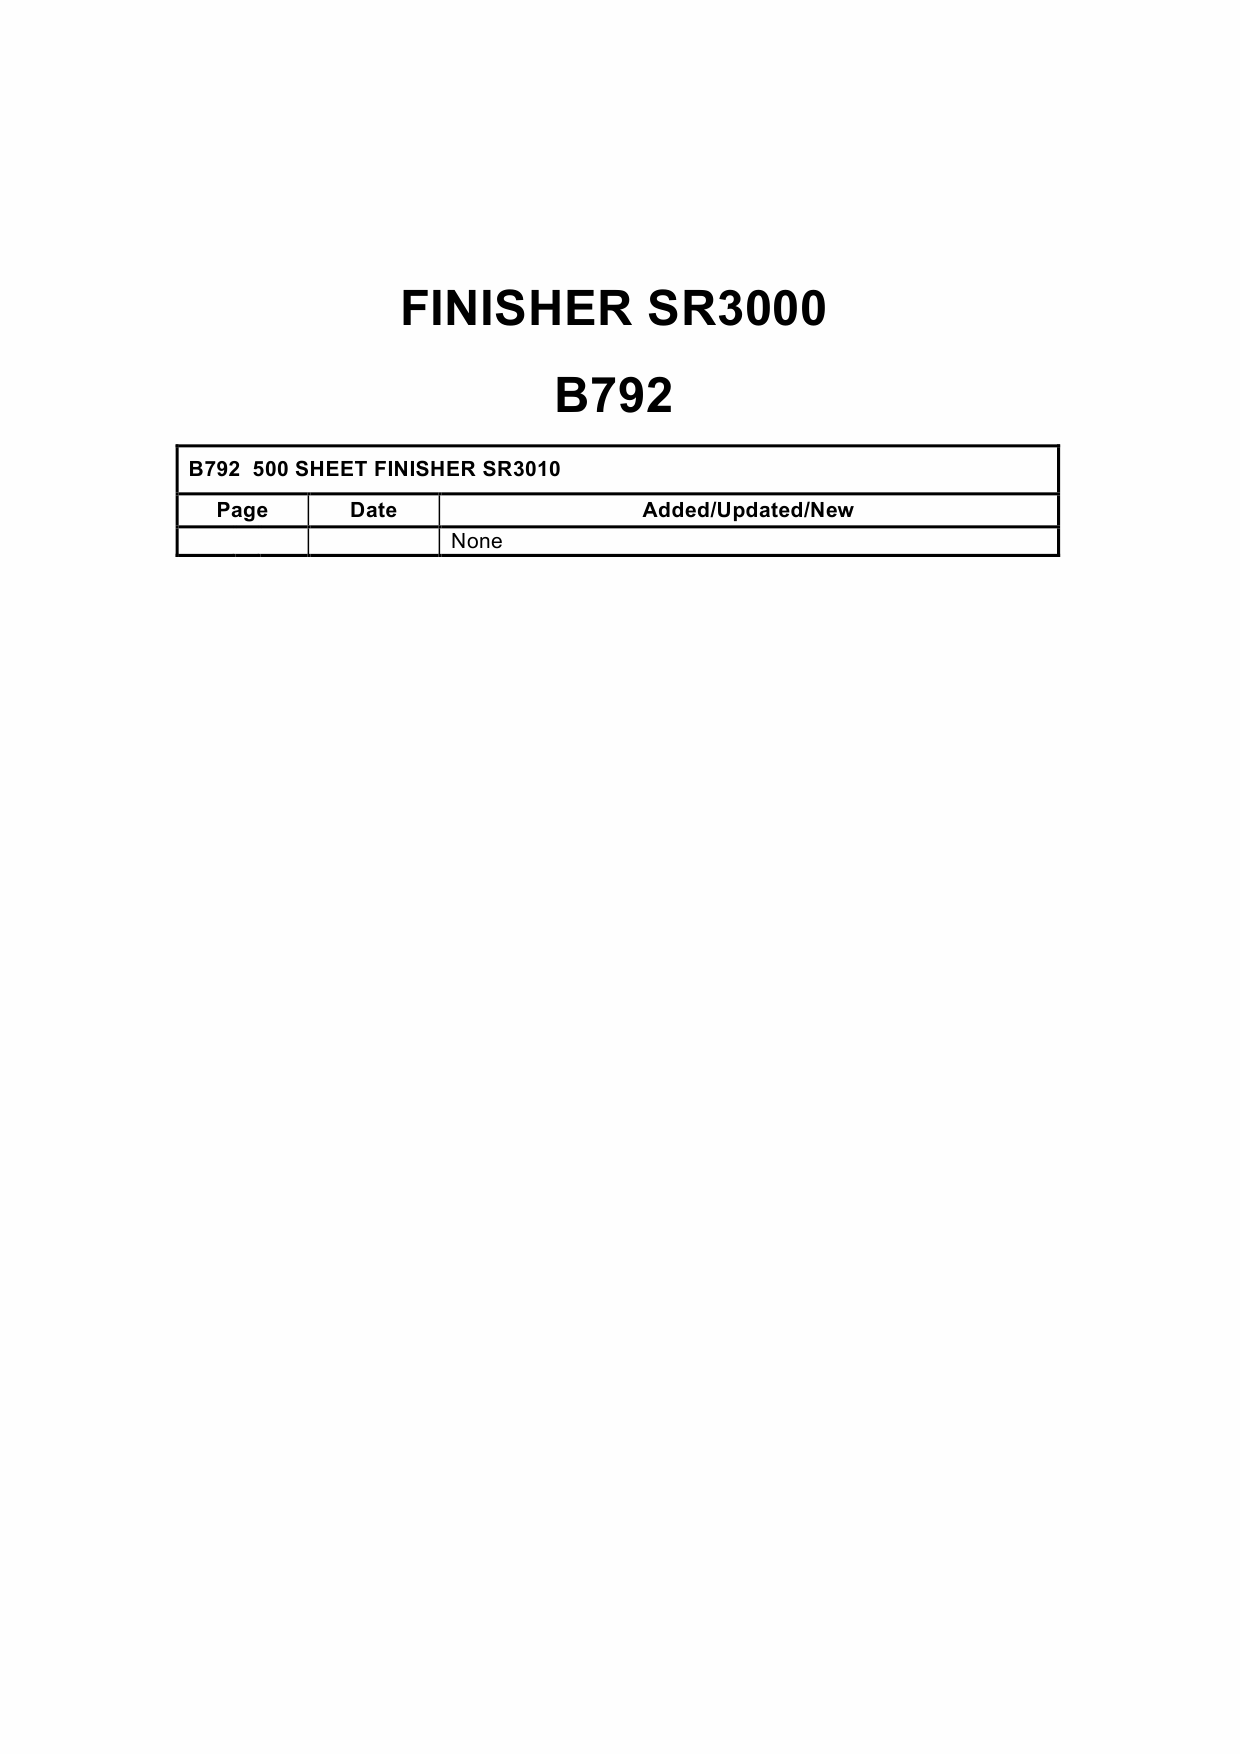 RICOH Options B792 FINISHER-SR3000 Service Manual PDF download-1